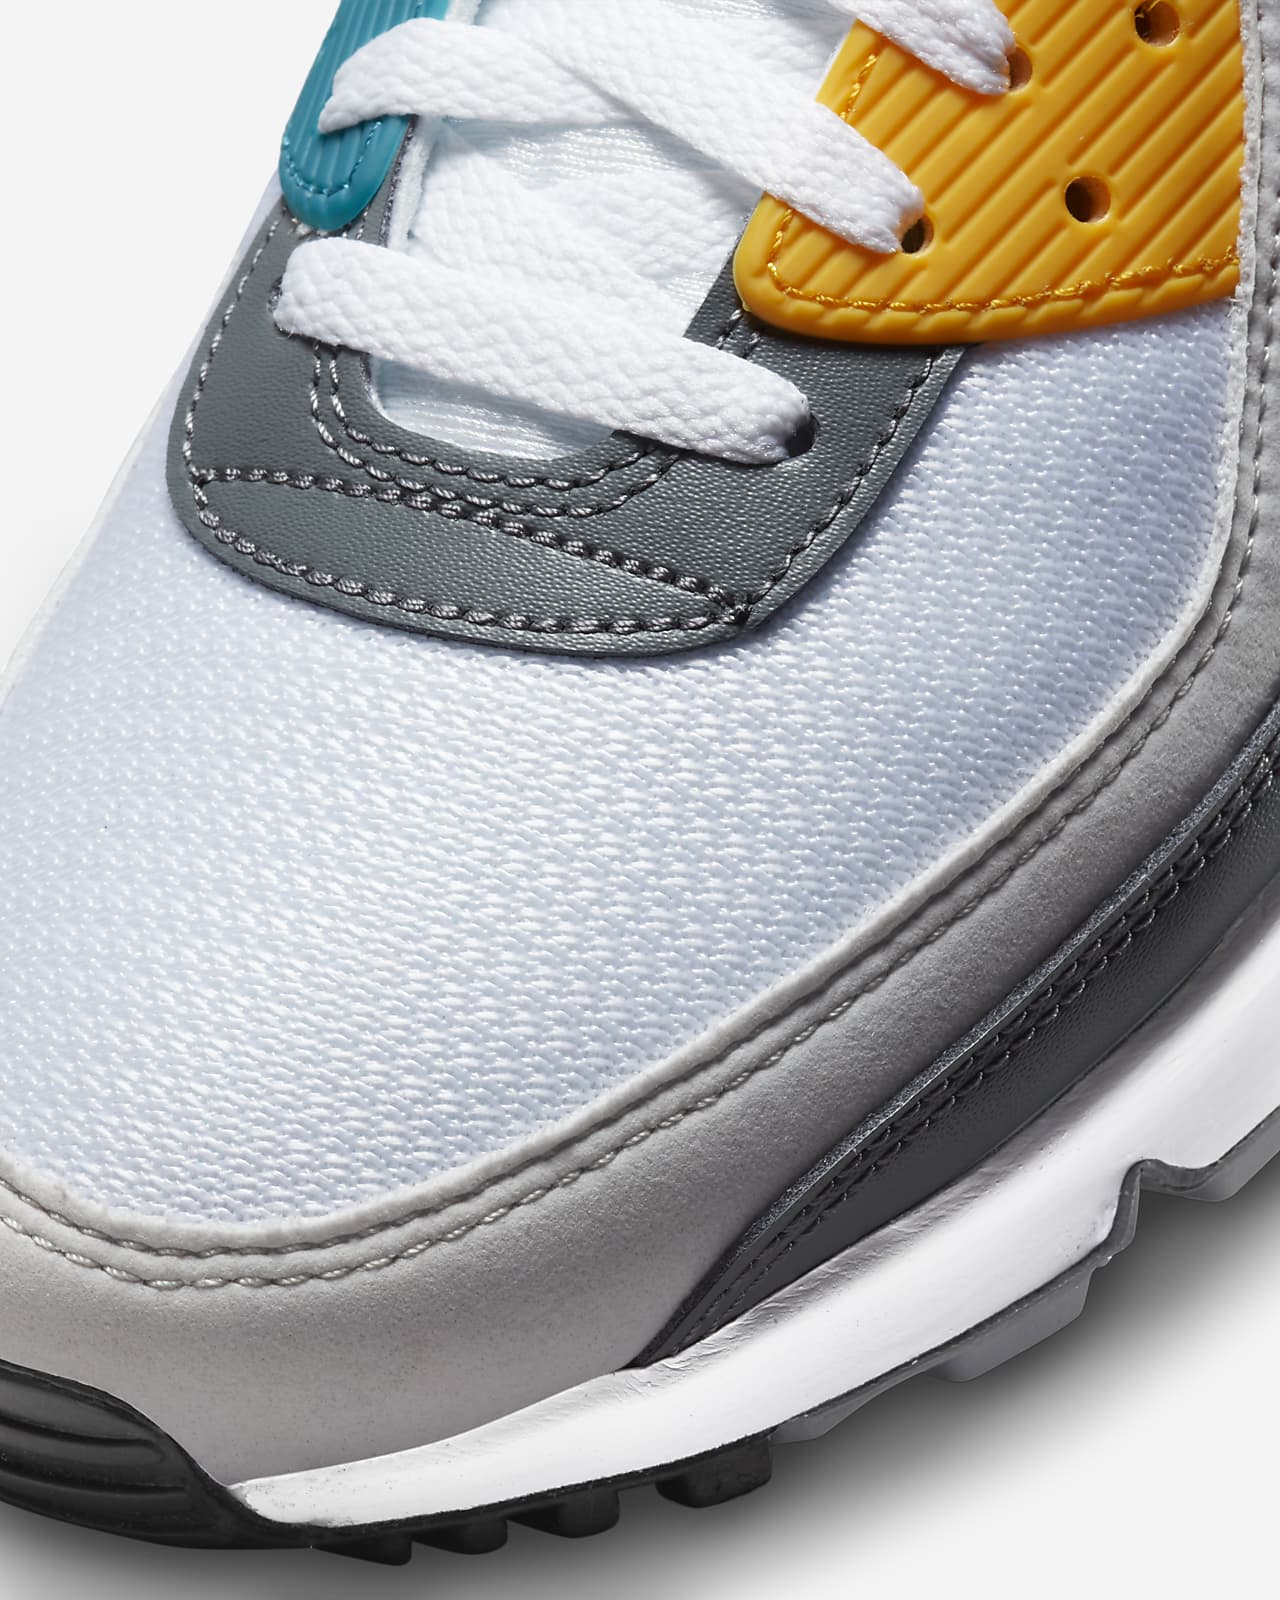 Nike Air Max 90 Premium-sko mænd. DK